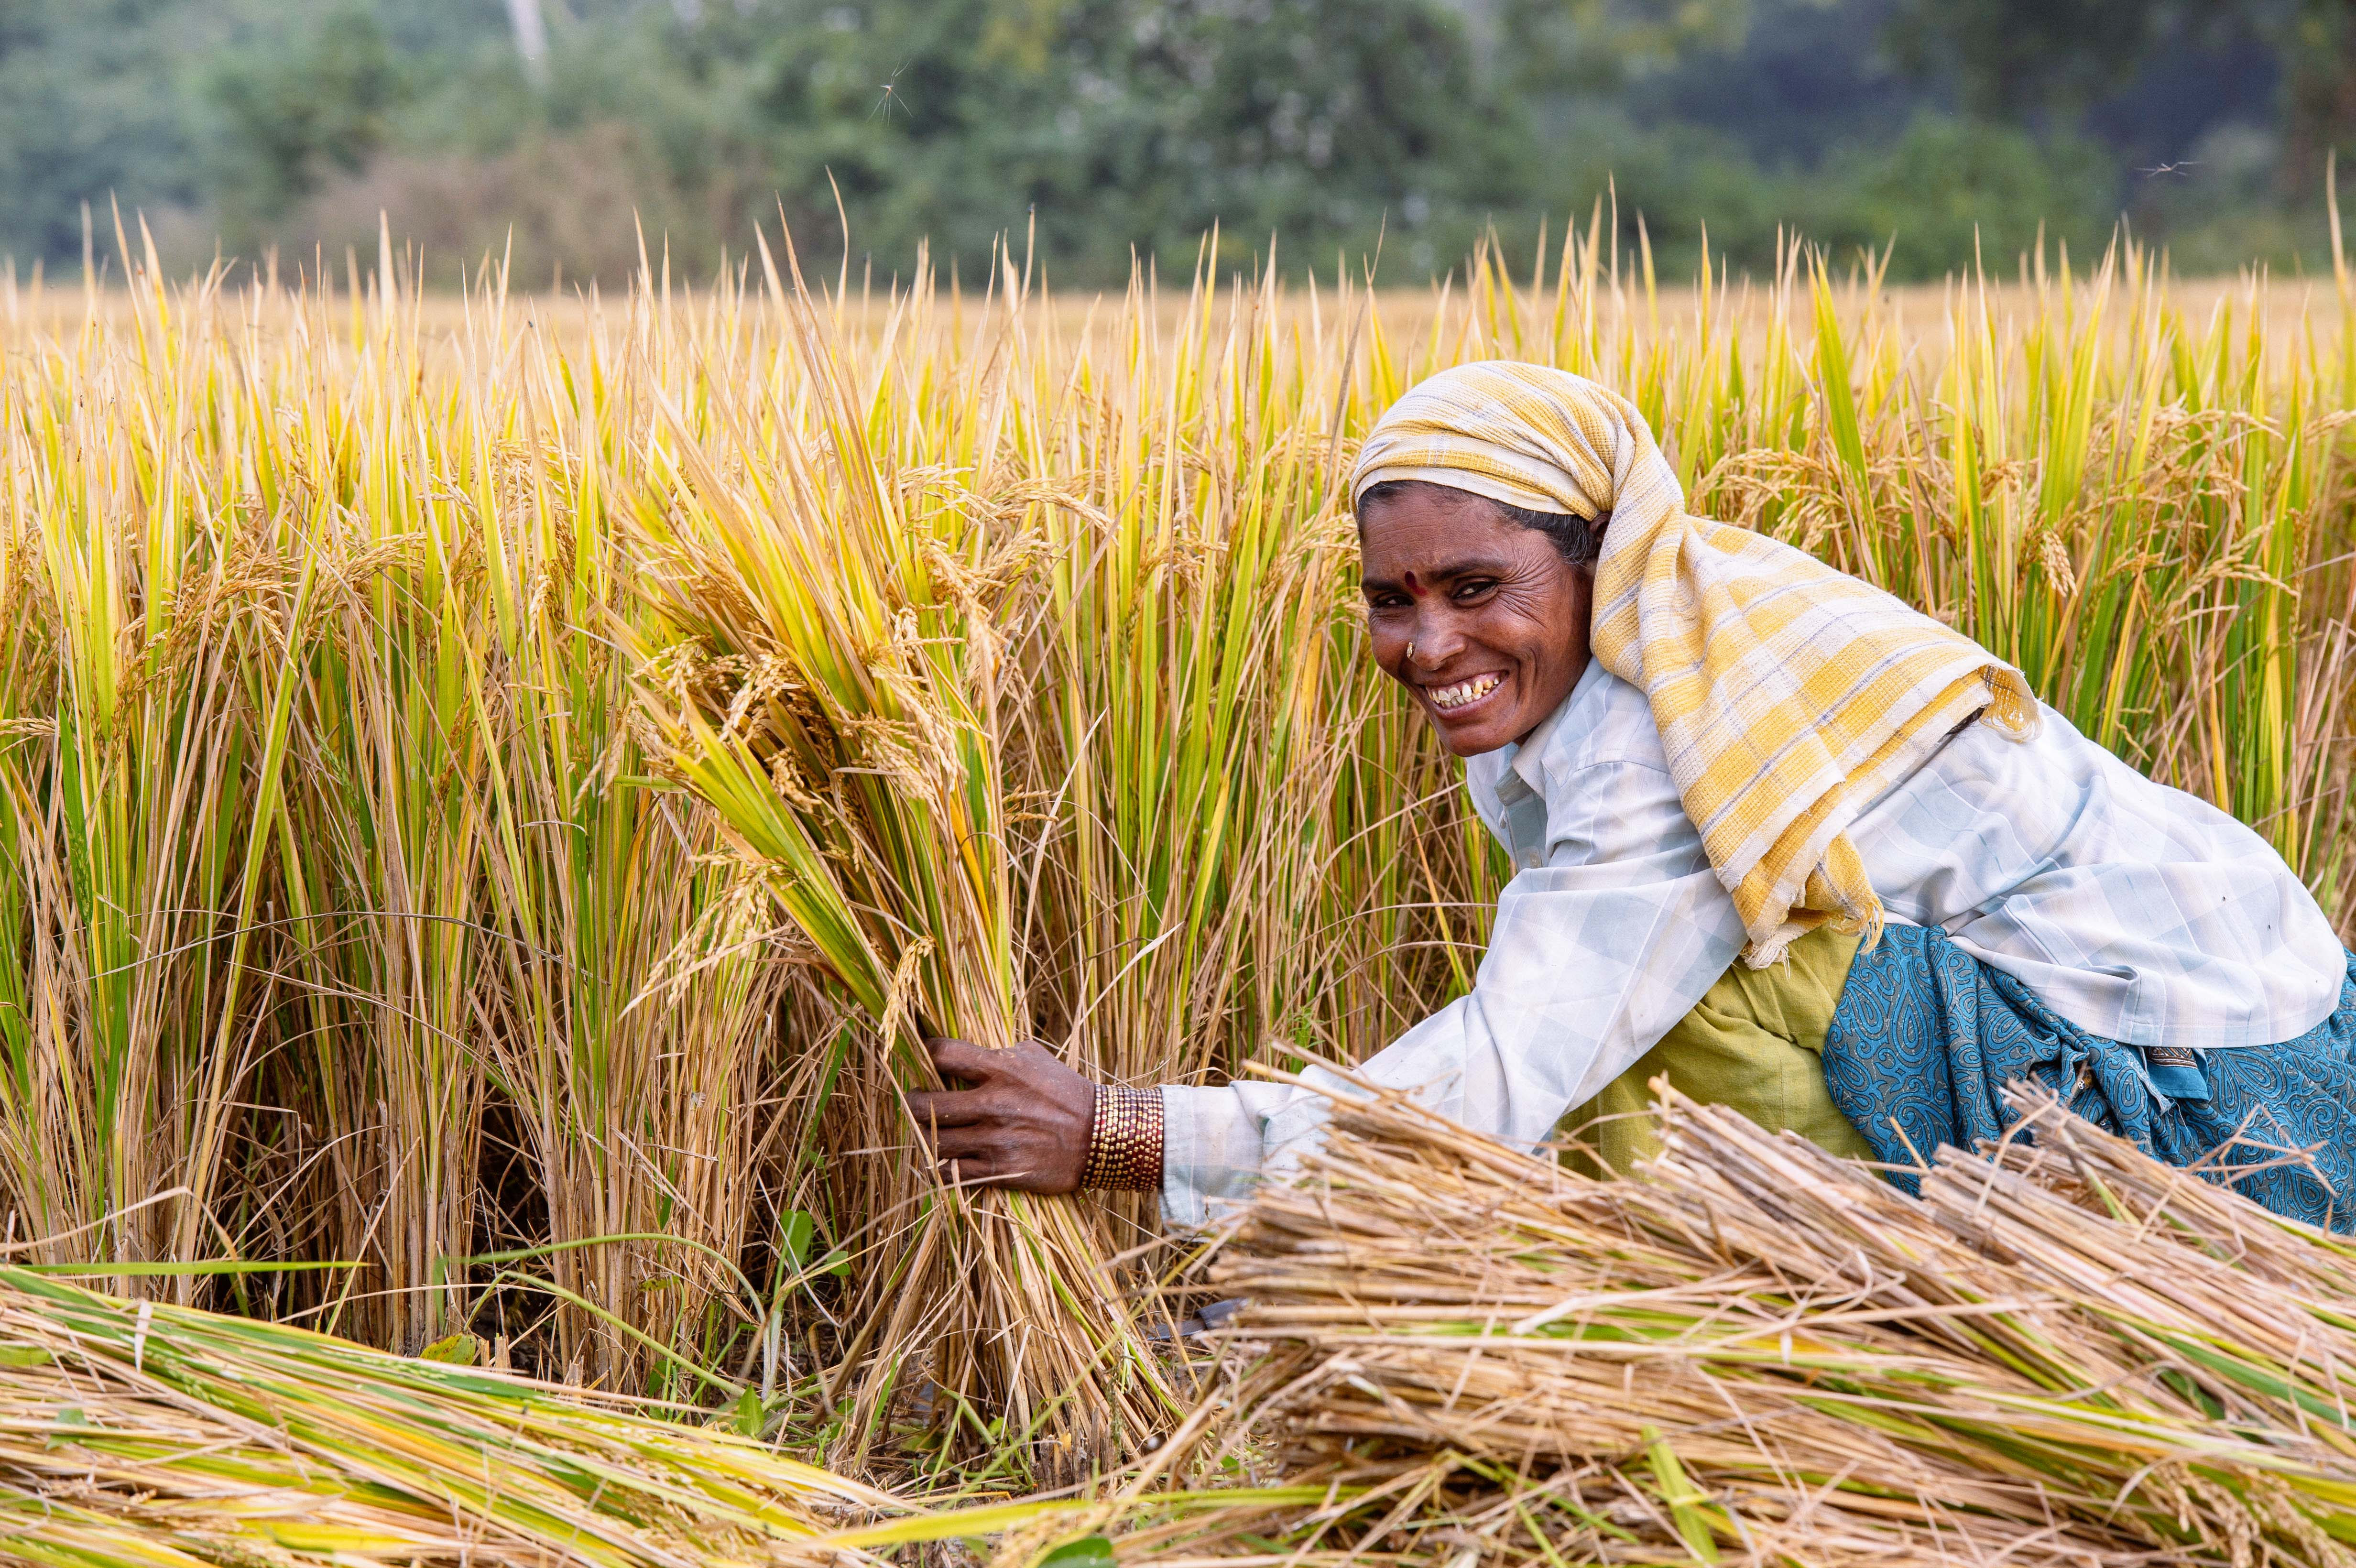 In northern india they harvest their wheat. Рисовые поля в Индии. Сельское хозяйство Индии. Сельское хозяйство Индии рис. Рисоводство в Индии.